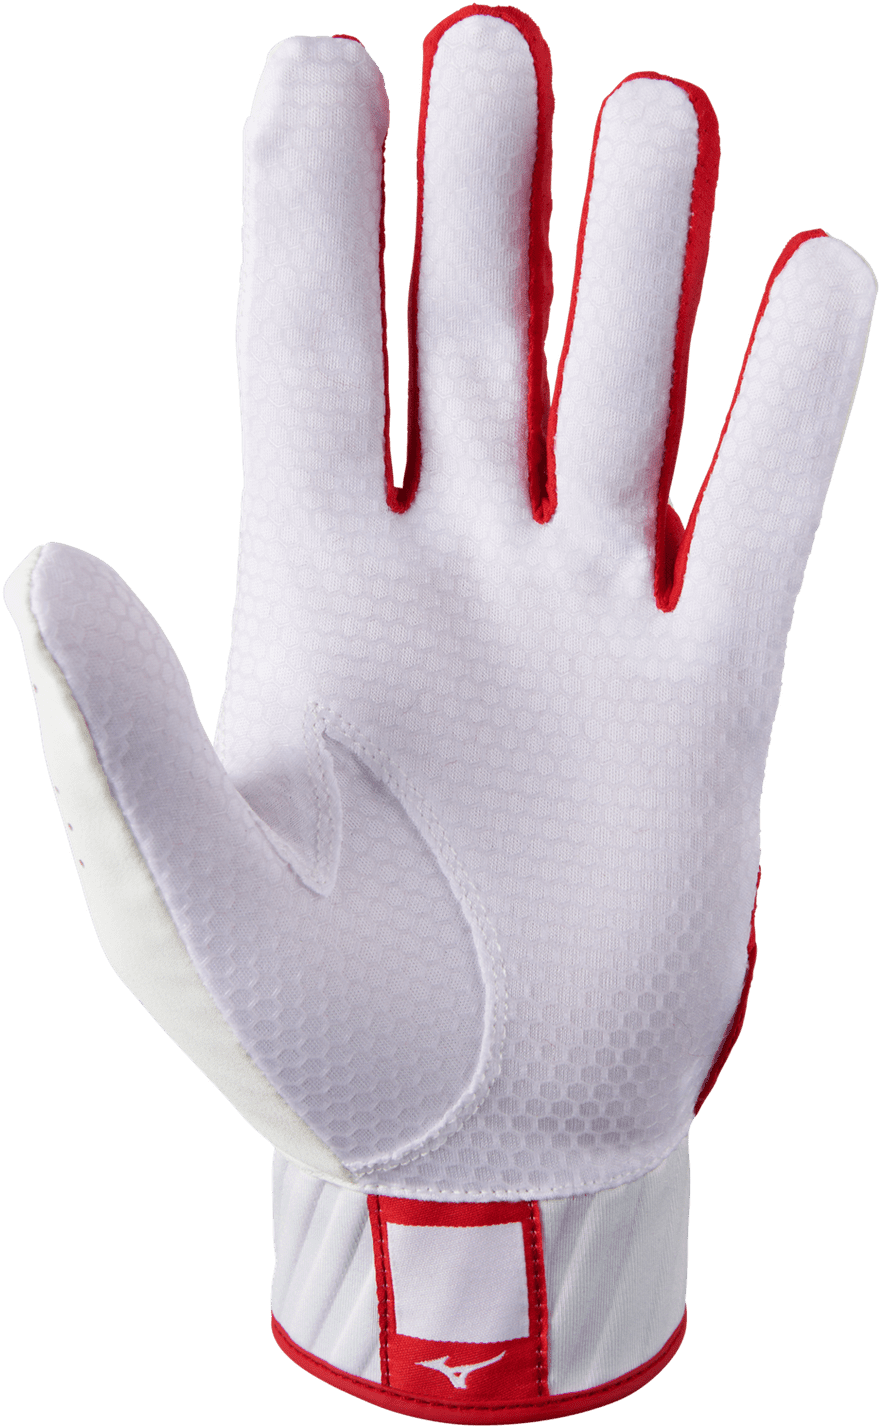 Mizuno MVP Adult Baseball Batting Glove - White Red - HIT a Double